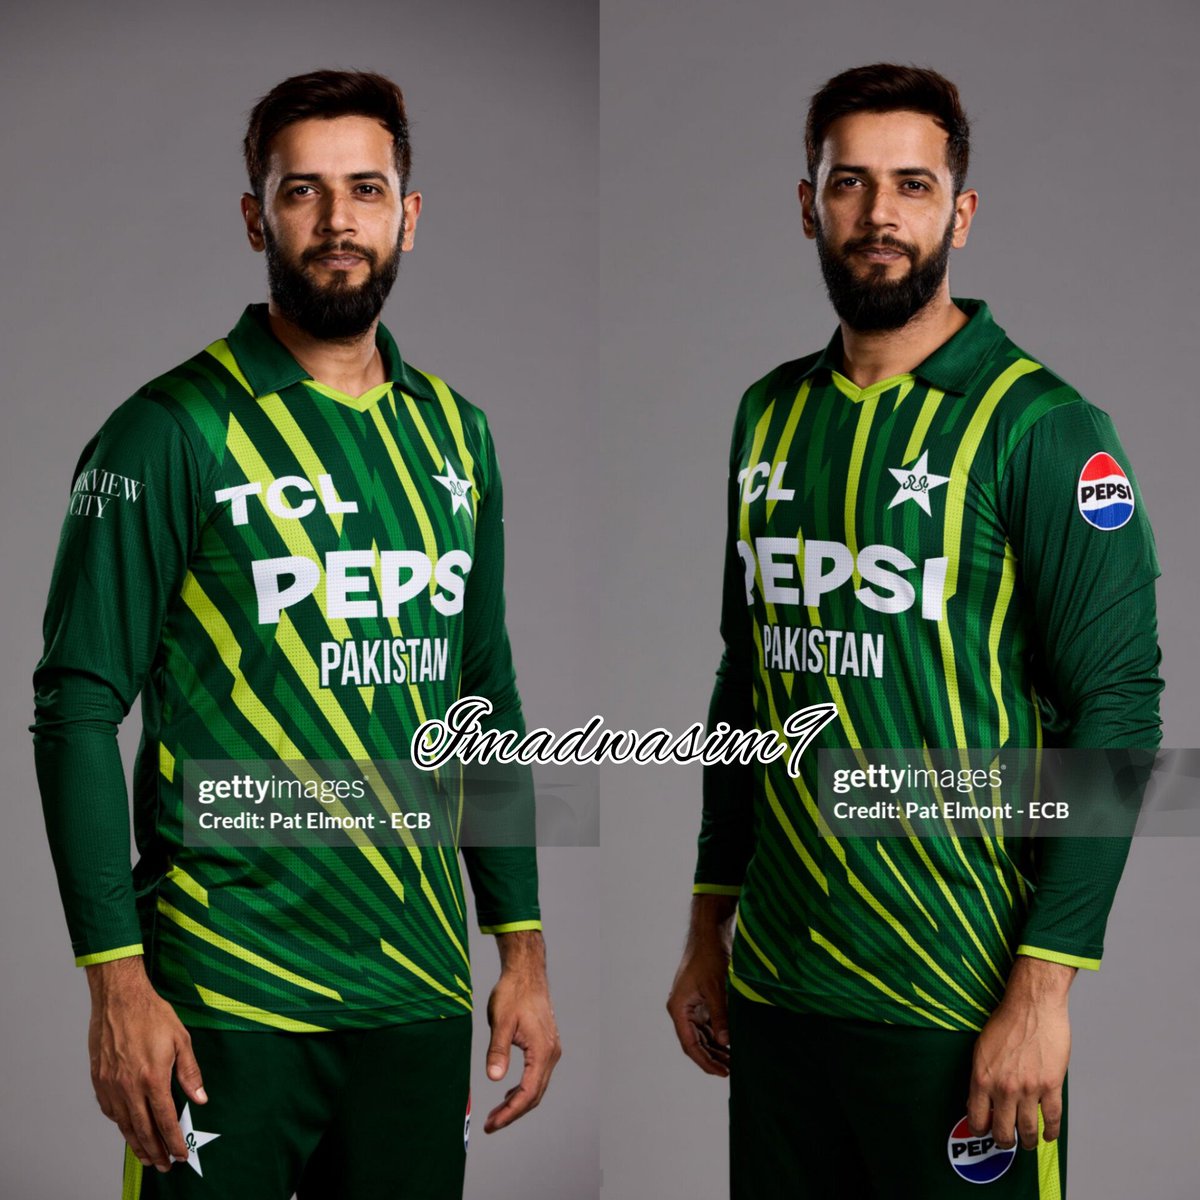 He😍🙌😭is Played look like Model Handsome Mr.09 Portraits Latest Photoshoot T20 England Series After 1 #T20WorldCup Year💚 Masha'Allah King @simadwasim #ImadWasim #imadwasim #Shadab #PAKvsENG #Cricket #CricketTwitter #BabarAzam𓃵 #BabarAzam #Rizwan #Shaheen #Pakistani #ENGvPAK